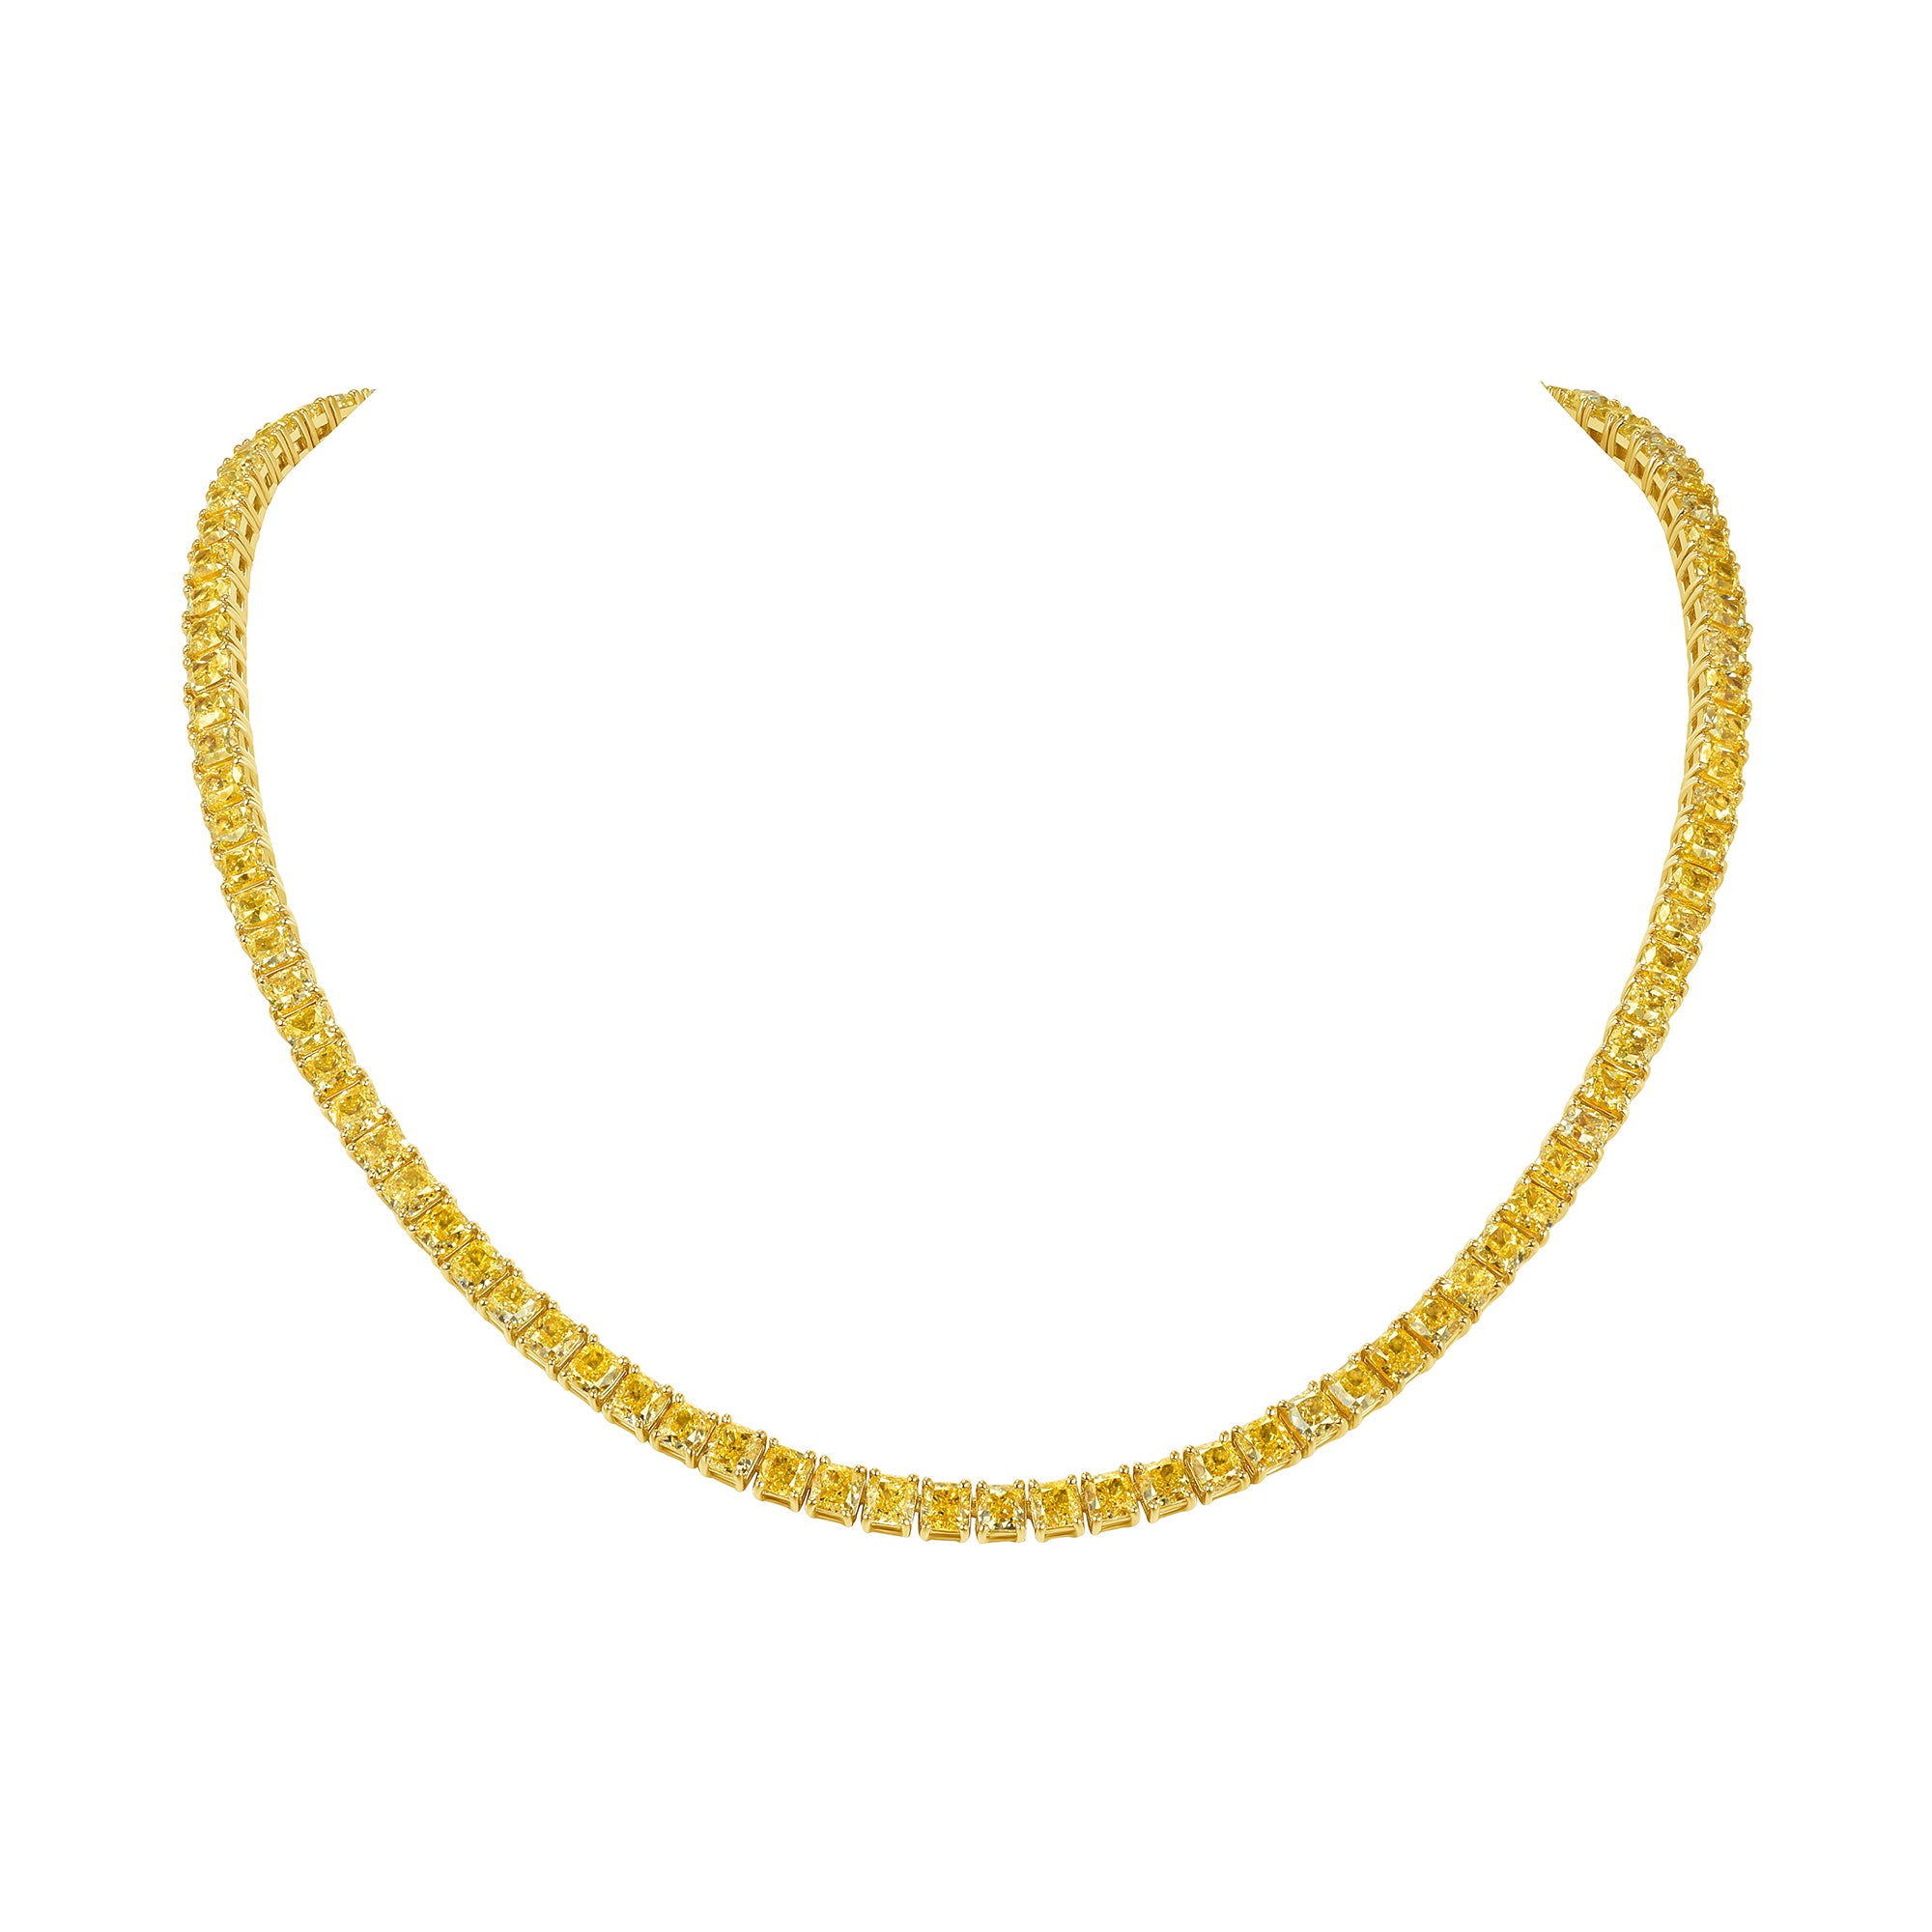 Cushion Cut Fancy Yellow Diamond Tennis Necklace in 18 Karat Yellow Gold